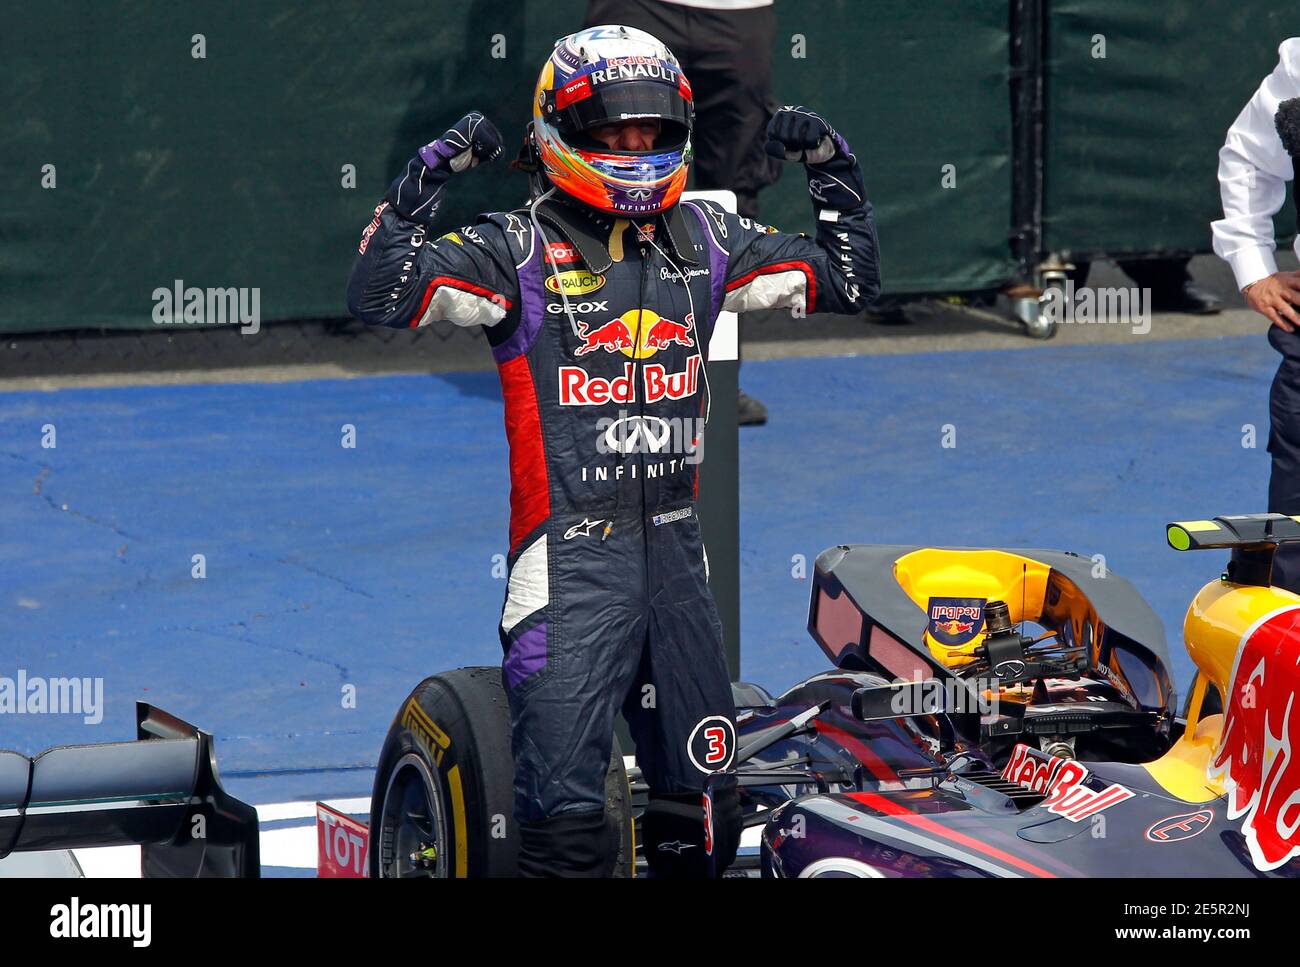 Red Bull Formula One driver Daniel Ricciardo of Australia celebrates after winning the Canadian F1 Grand Prix at the Circuit Gilles Villeneuve in Montreal June 8, 2014. REUTERS/Chris Wattie (CANADA  - Tags: SPORT MOTORSPORT F1) Stock Photo